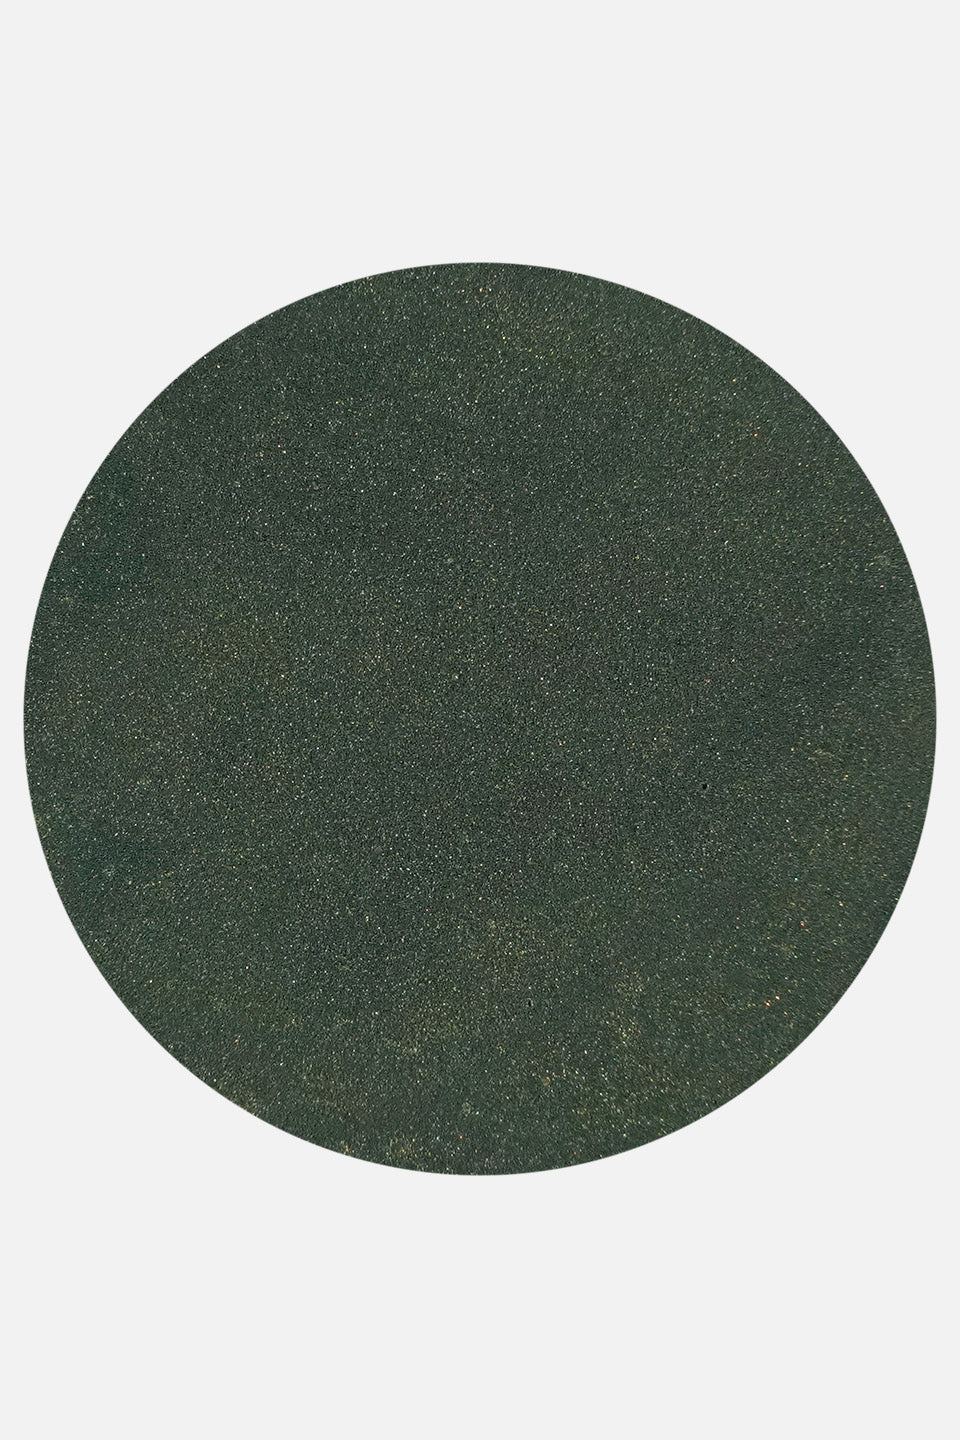 Polvere acrilica verde Ortica 3 g